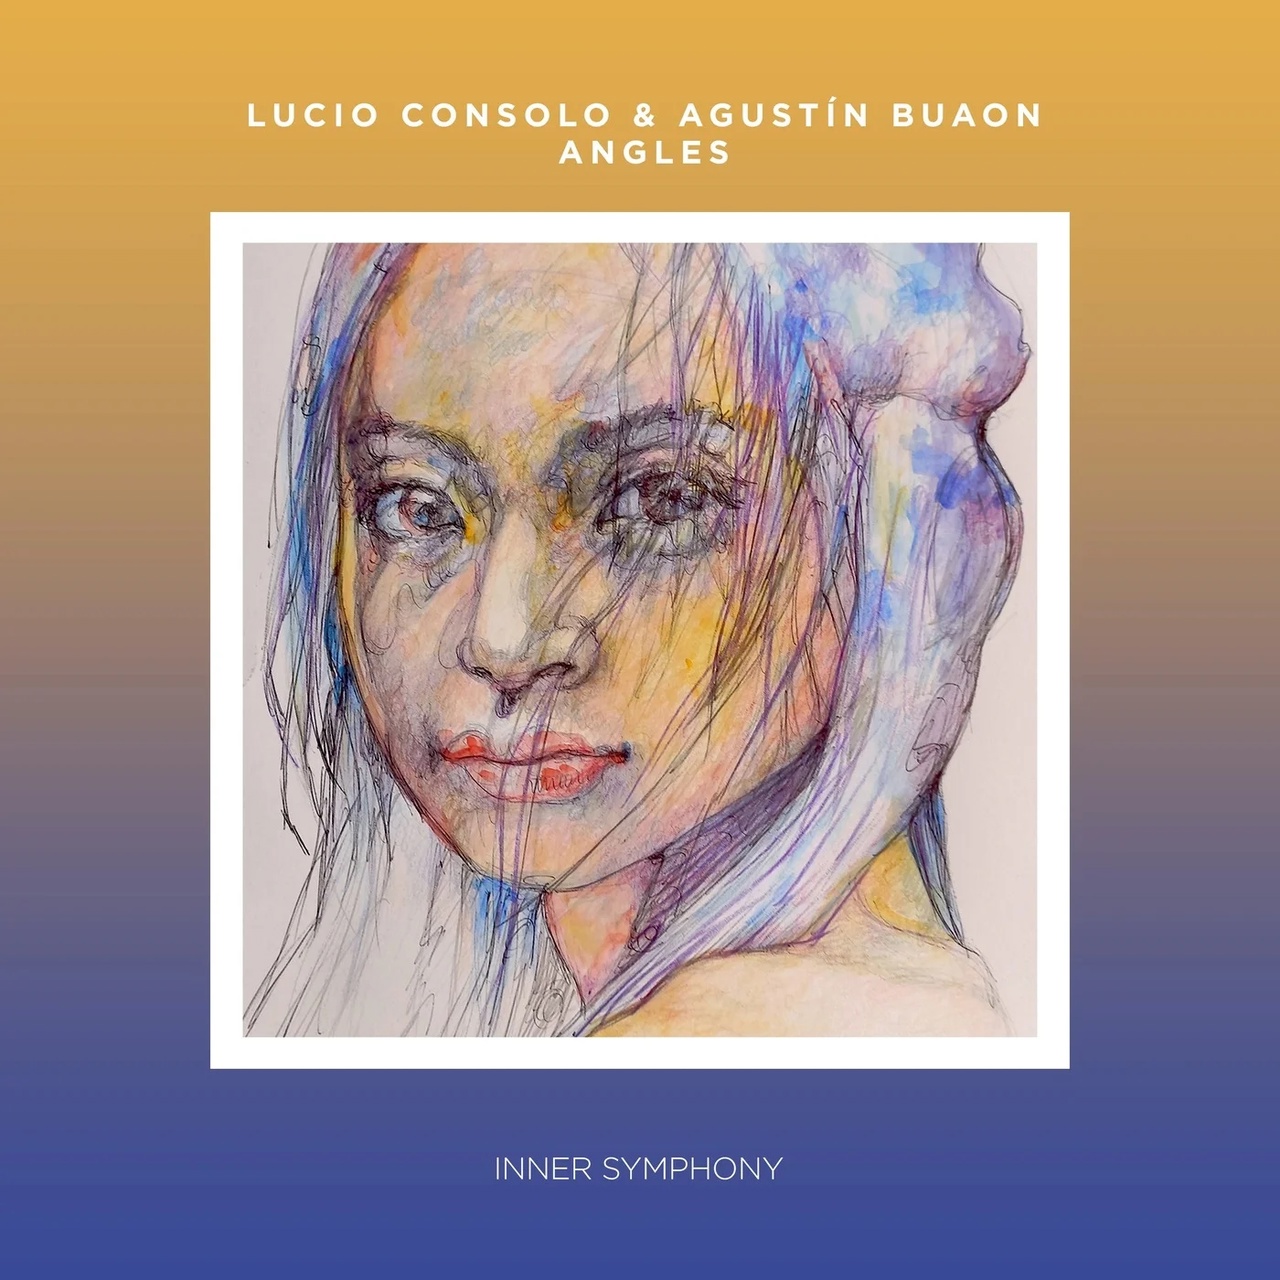 Lucio Consolo, Agustin Buaon - Angles (Original  Mix)